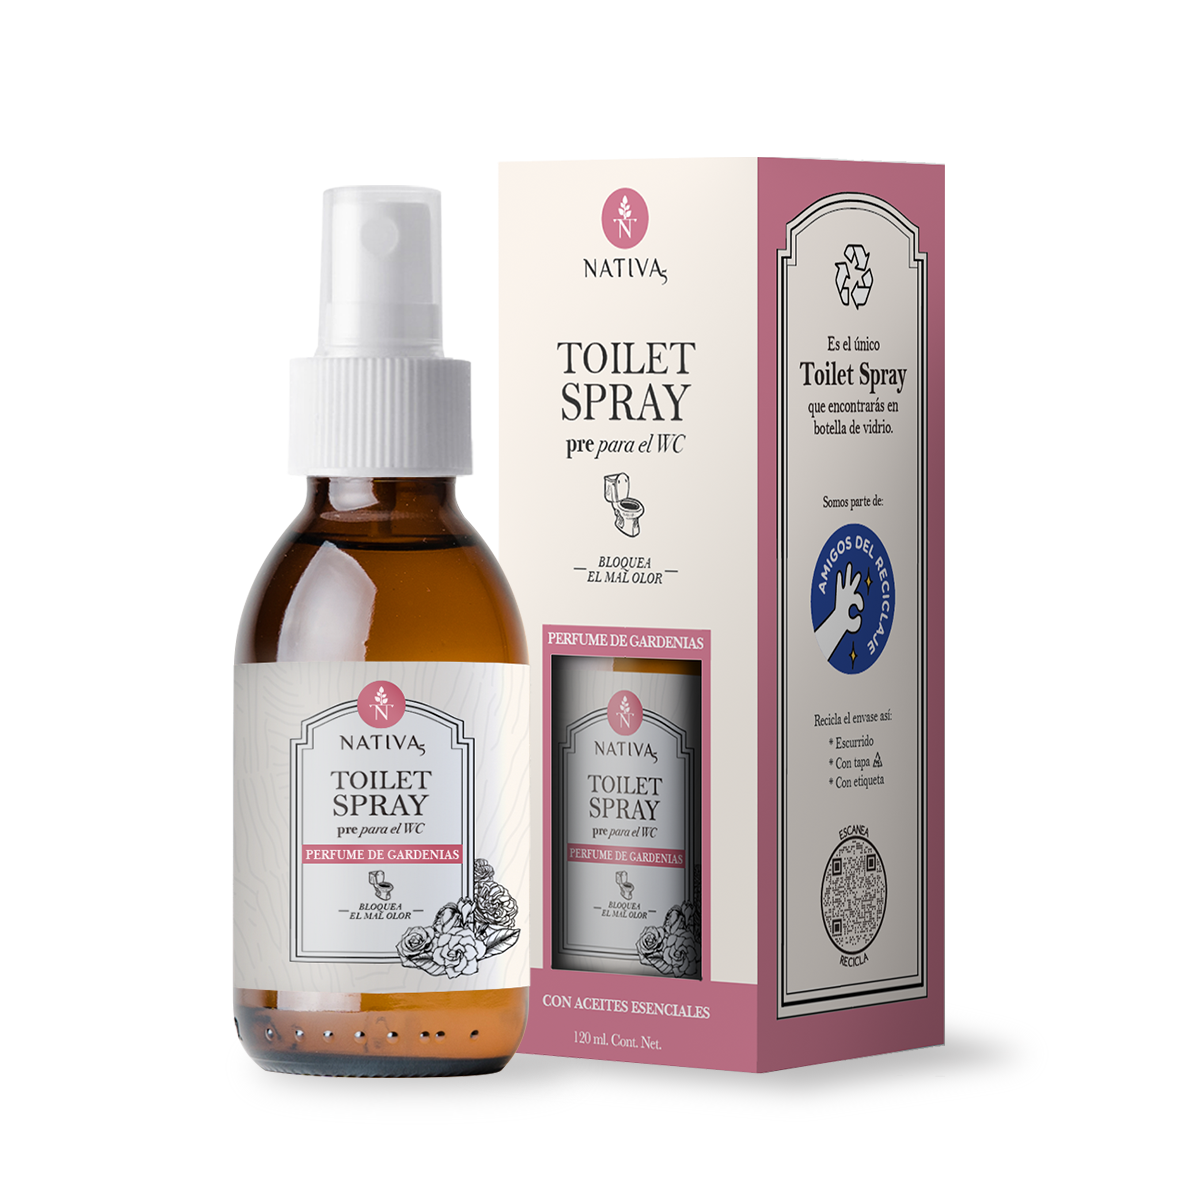 TOILET SPRAY - Aroma Perfume de Gardenias 120ml. Elimina el mal olor del WC.